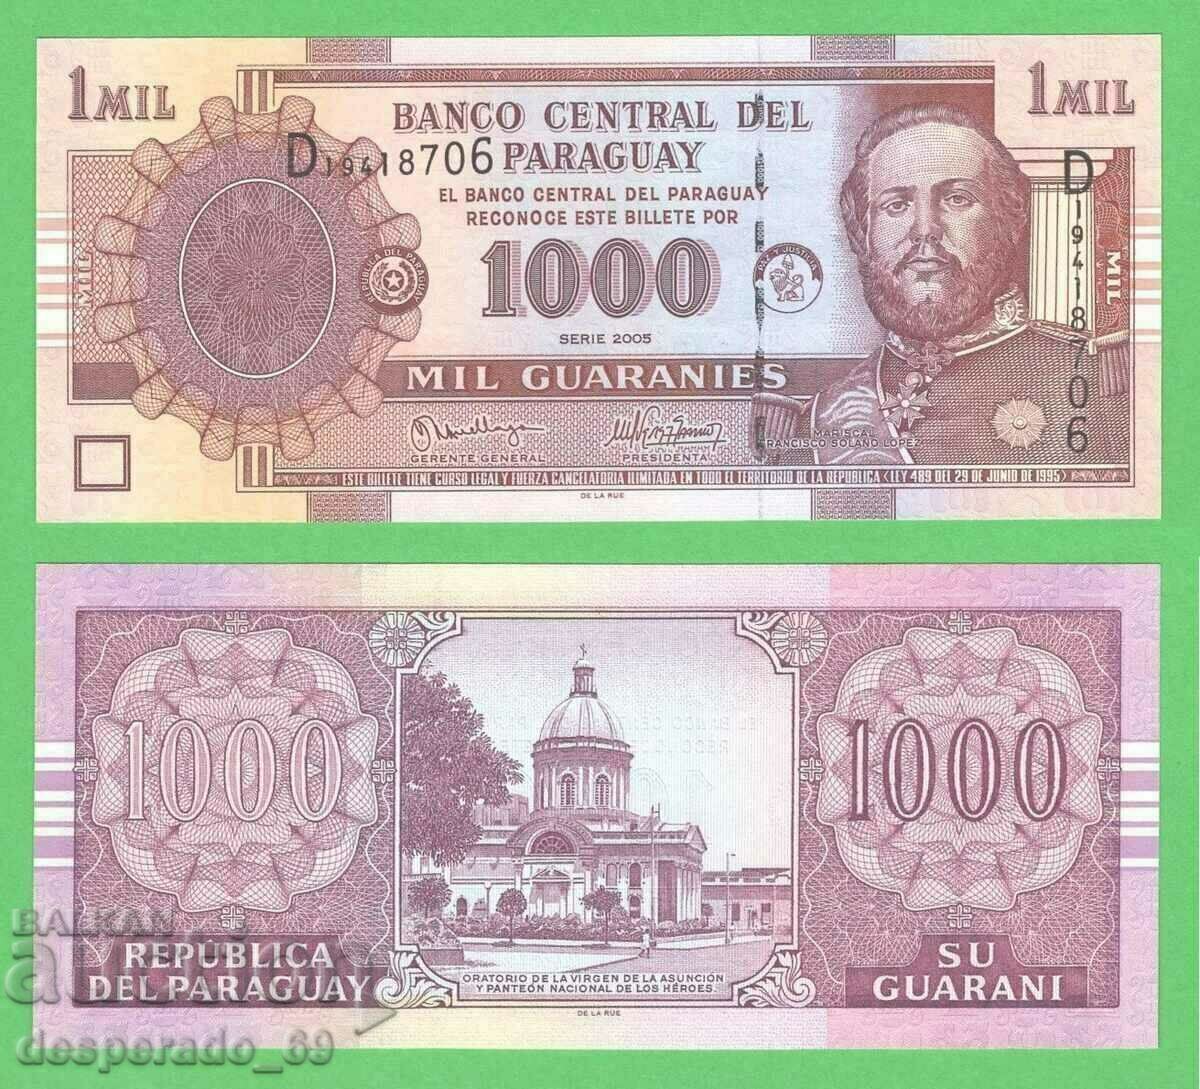 (¯`'•.¸ PARAGUAY 1000 guarani 2005 UNC ¸.•'´¯)